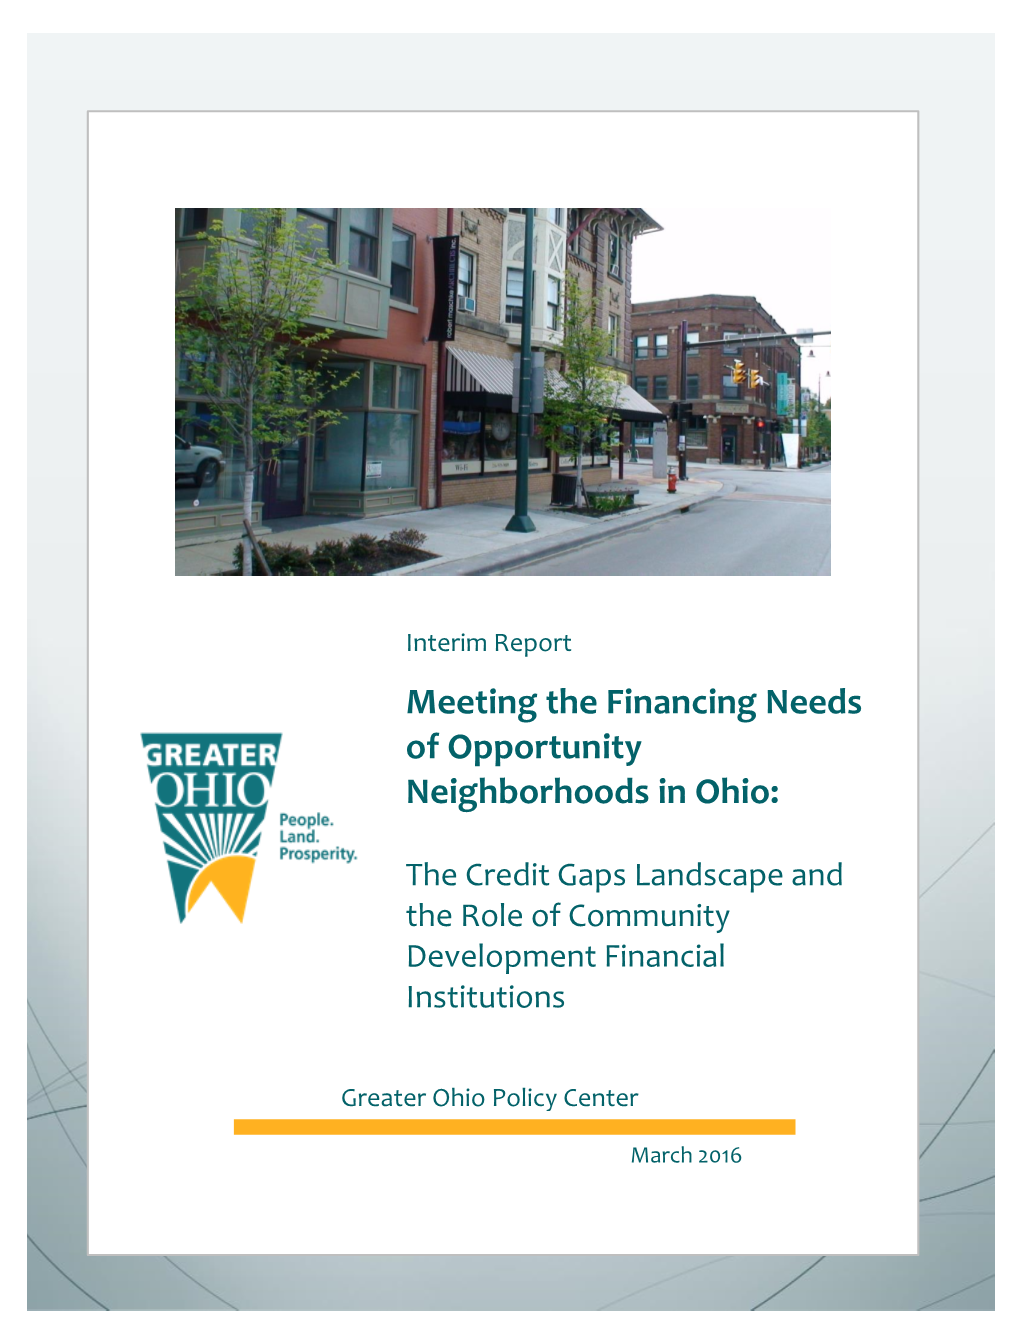 Meeting the Financing Needs of Opportunity Neighborhoods in Ohio